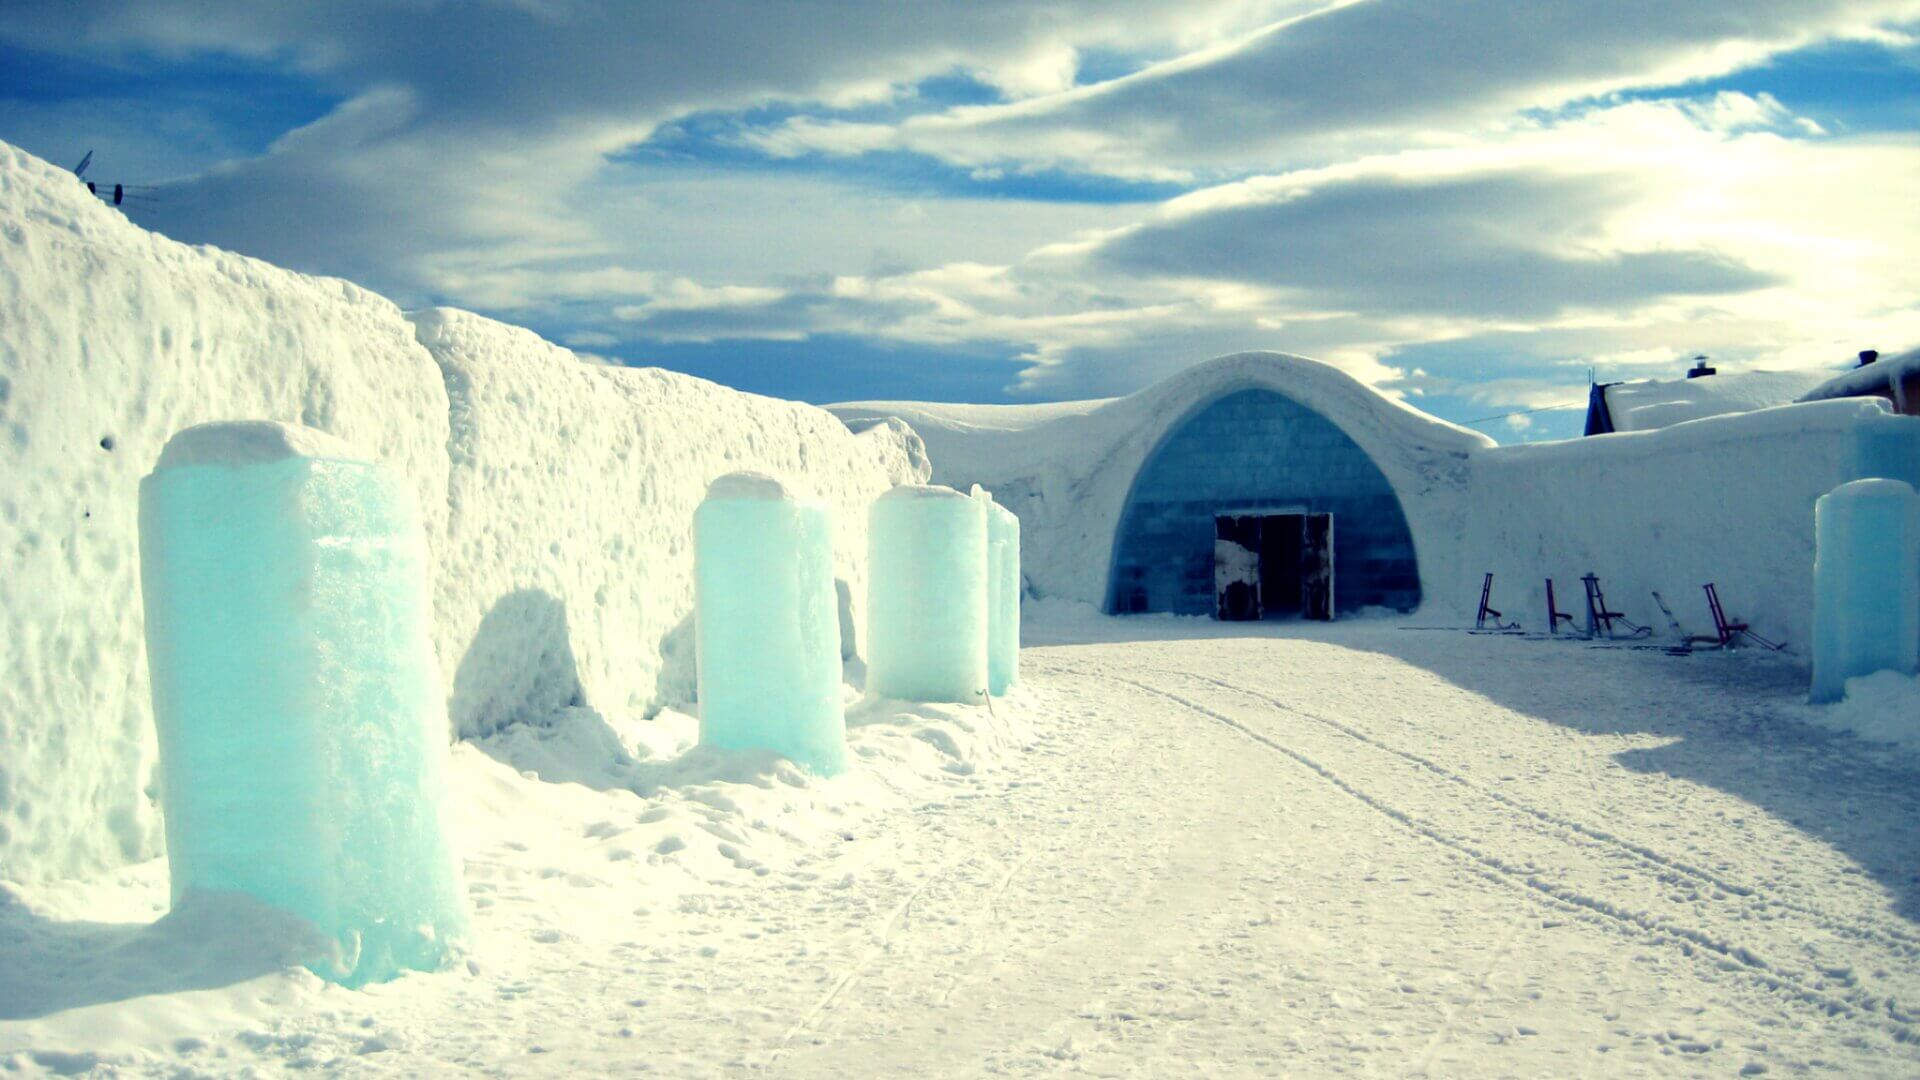 Visit the incredible Aurora Ice Museum located in Alaska.